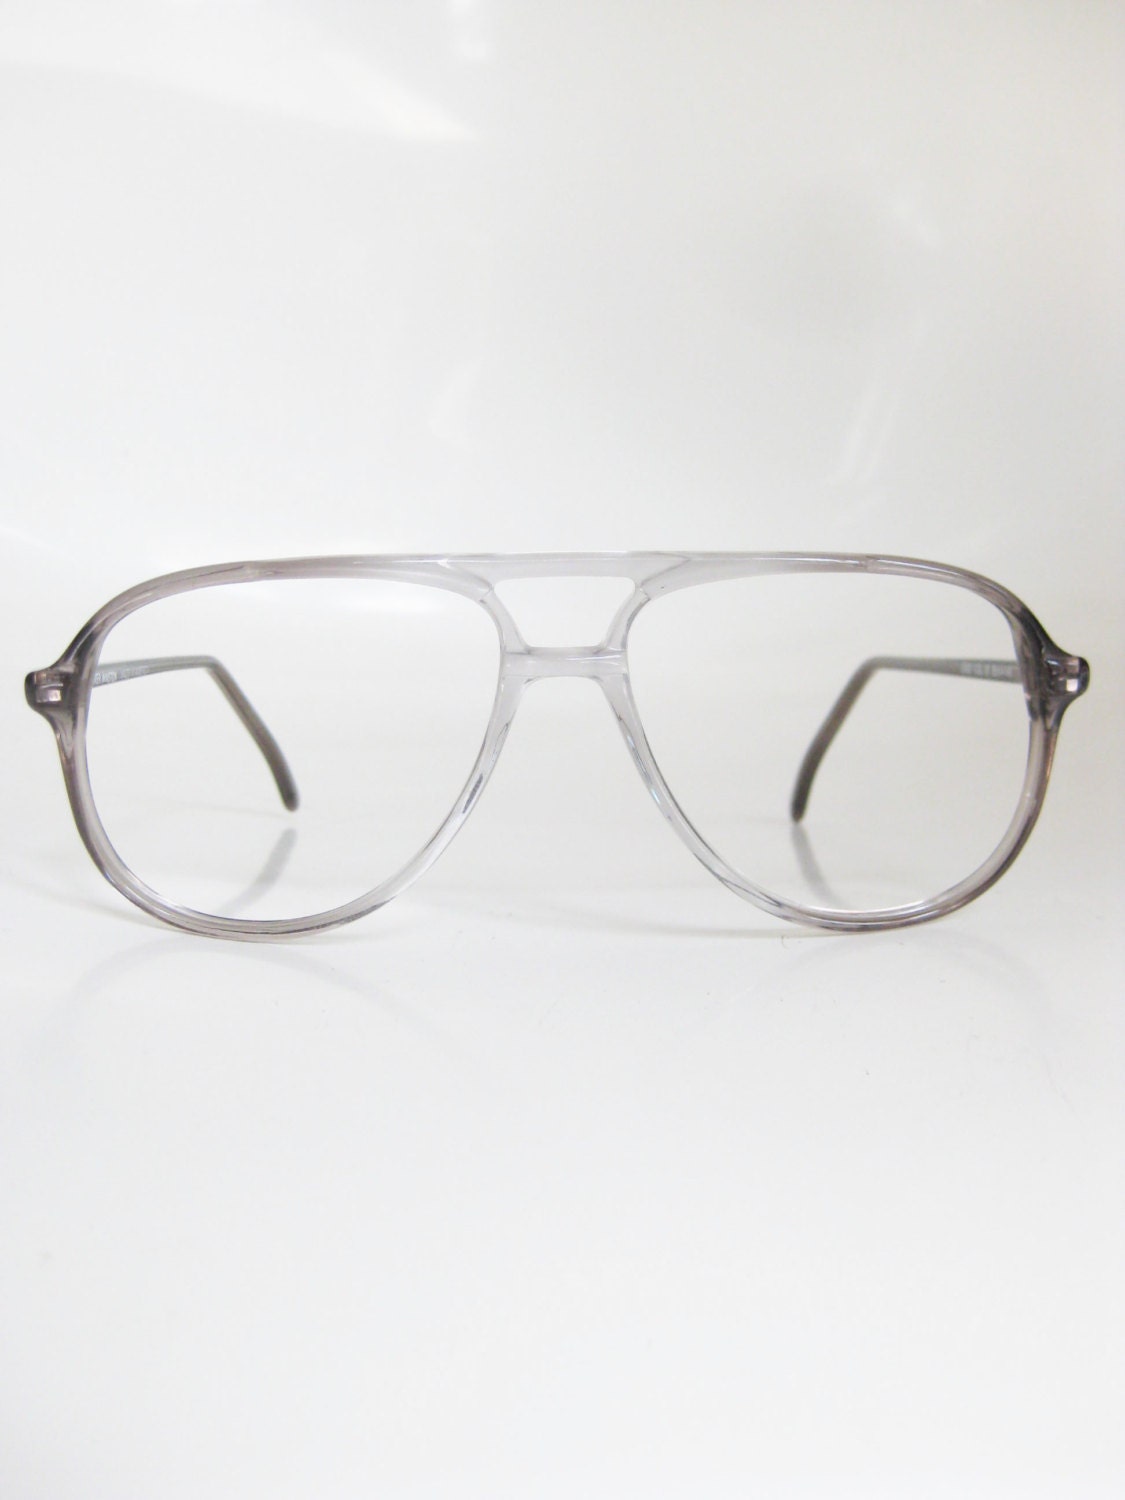 Vintage 1980s Aviator Eyeglasses Mens Eyewear By Oliverandalexa